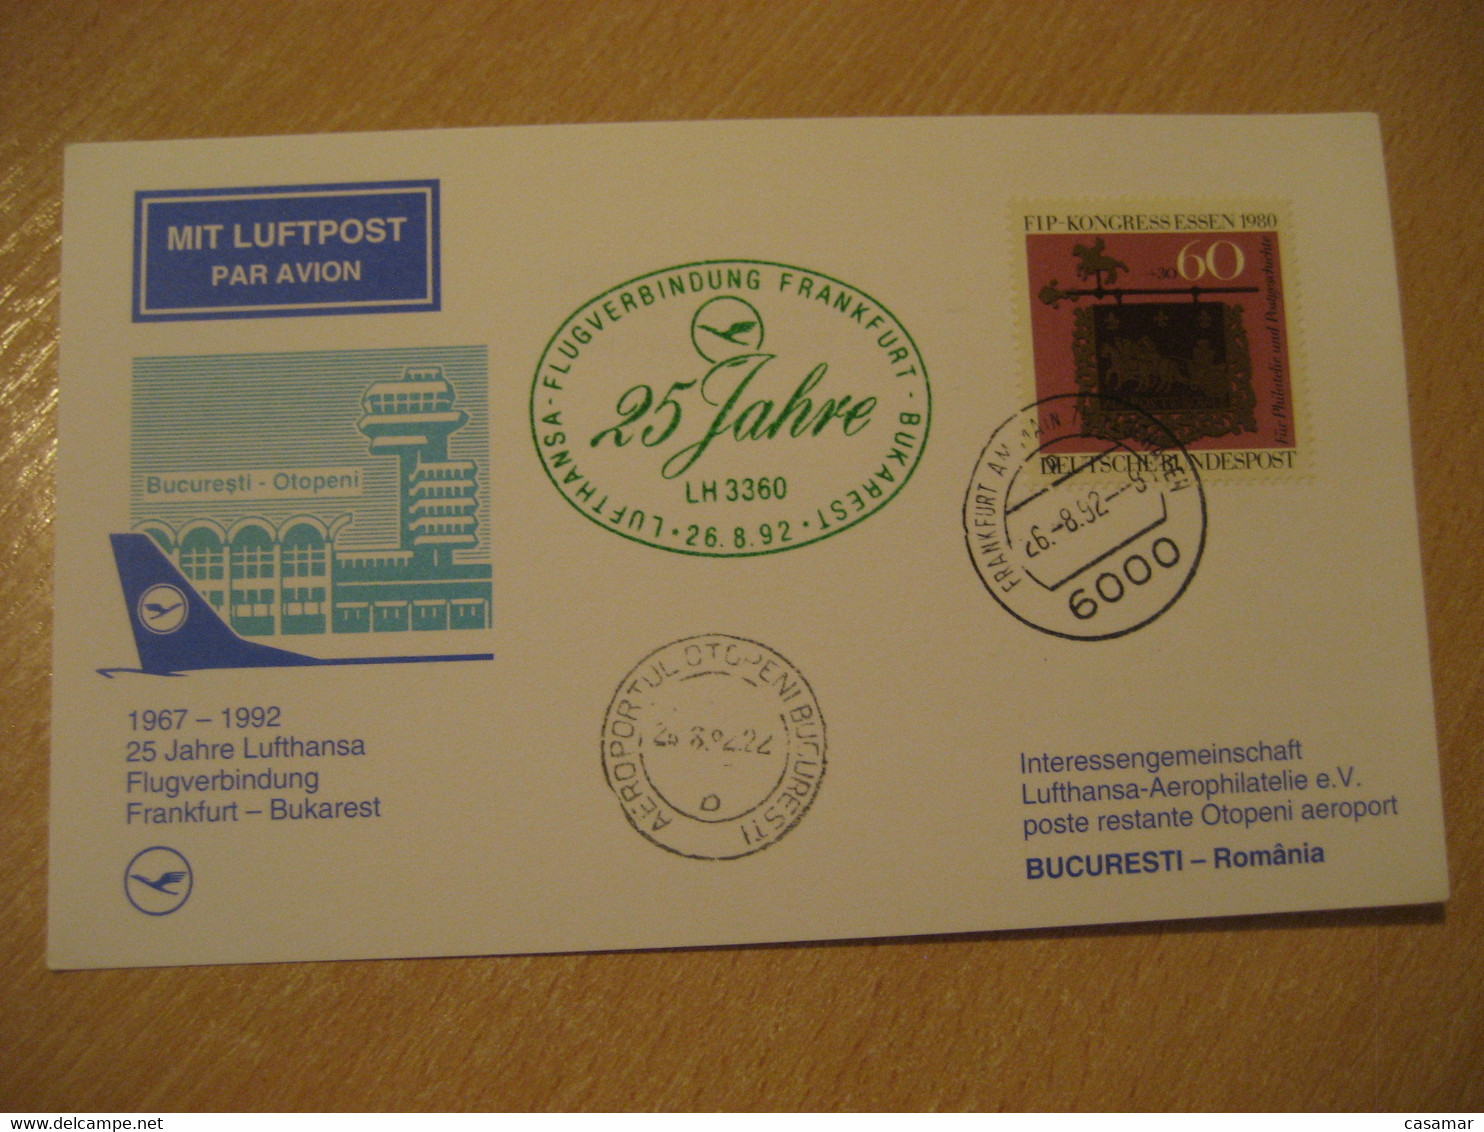 BUCHAREST Frankfurt 1992 Lufthansa Airlines Airline 25 Year First Flight Green Cancel Card ROMANIA GERMANY - Cartas & Documentos